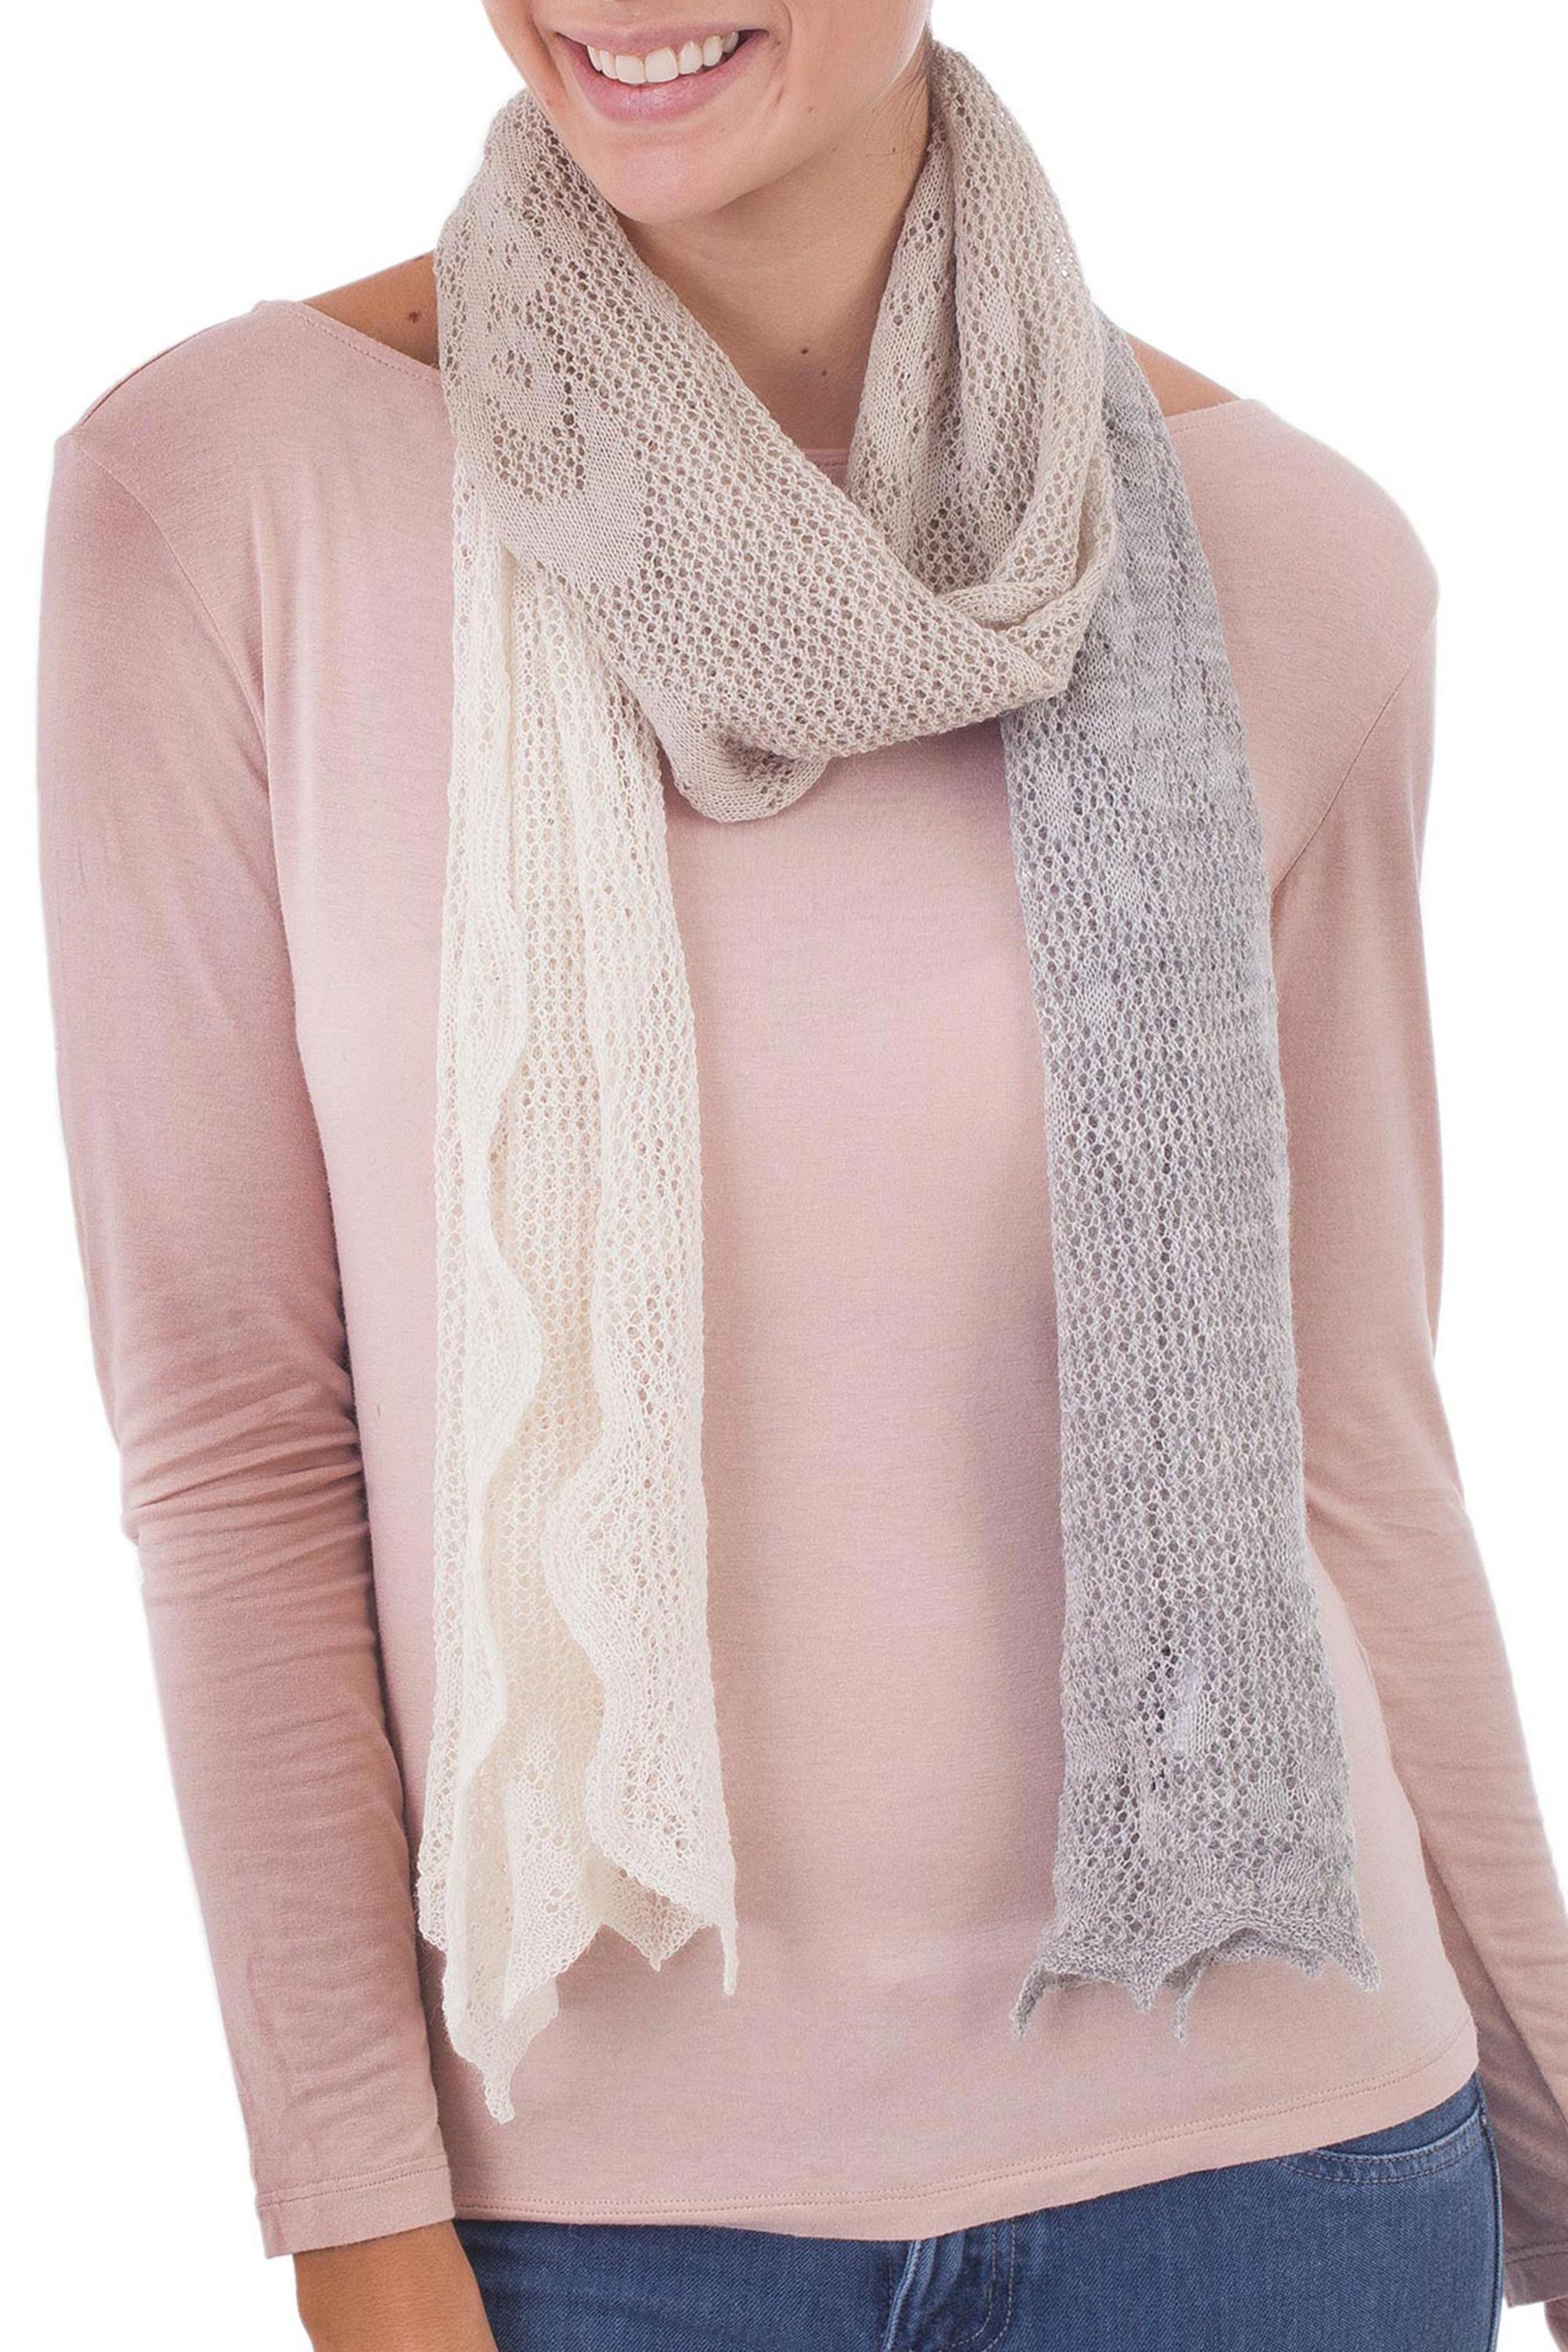 Women's Fashion Scarves Pretty Graphics tassel shawl Cotton soft scarf 35"*71" 